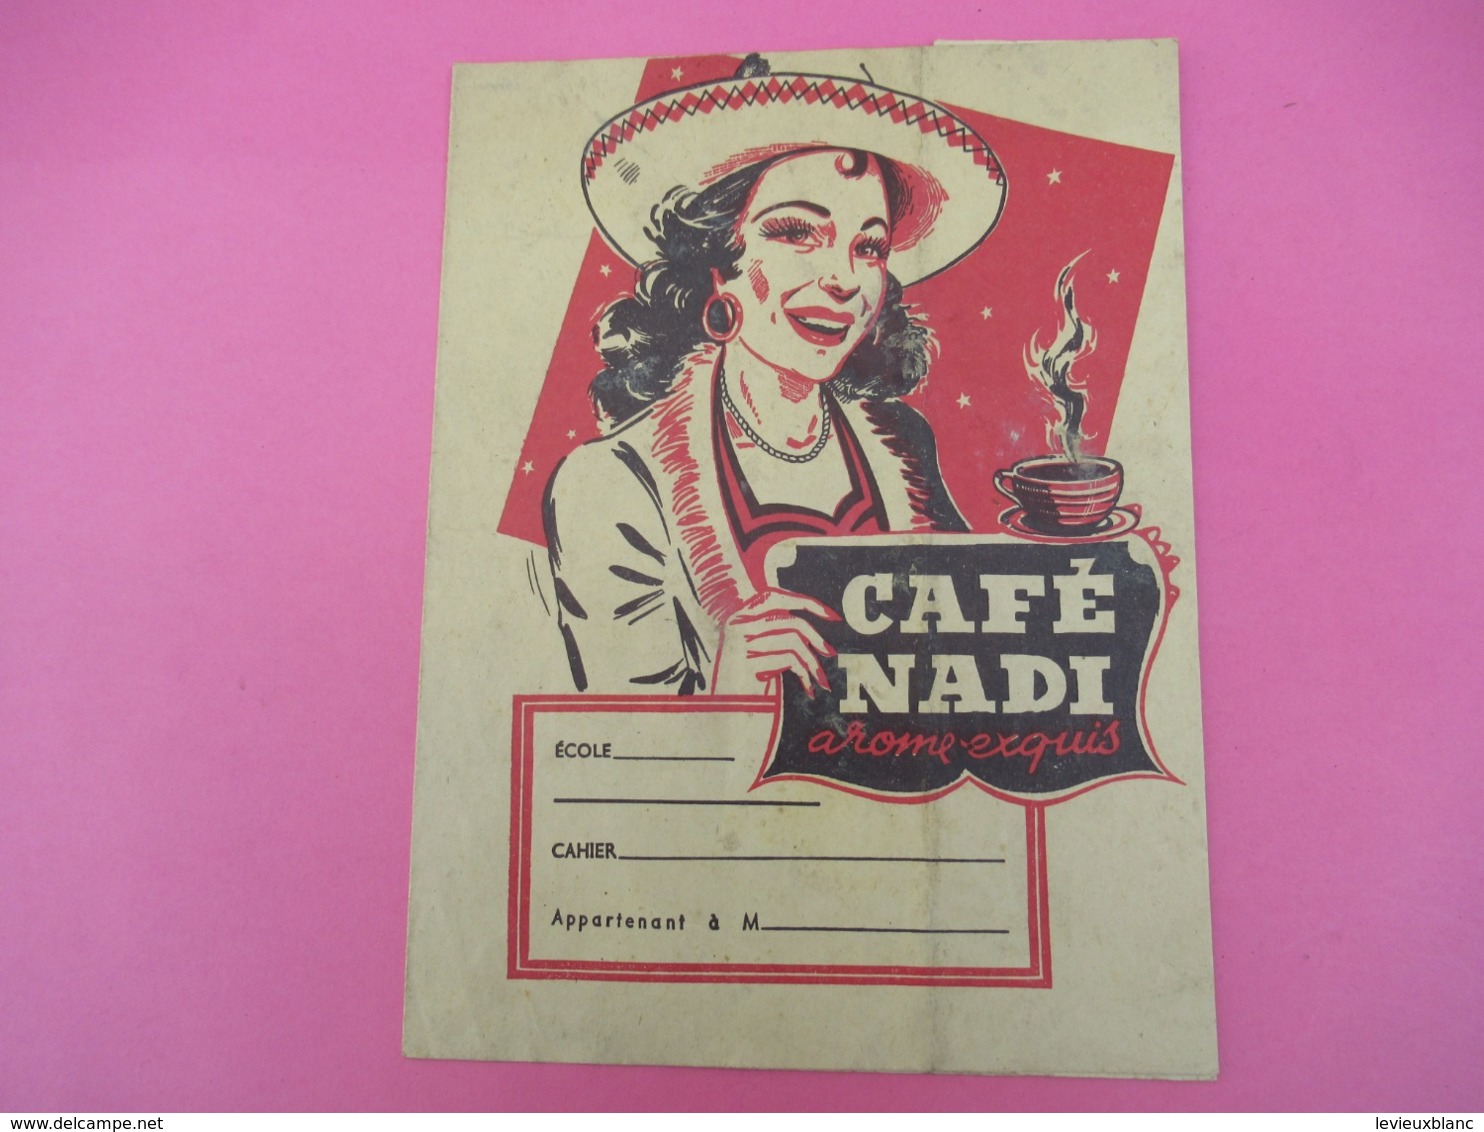 Protège-Cahier/Café/ Café NADI Arôme Exquis/ Le Cirque Nadi  /Vers 1950  CAH224 - Café & Thé